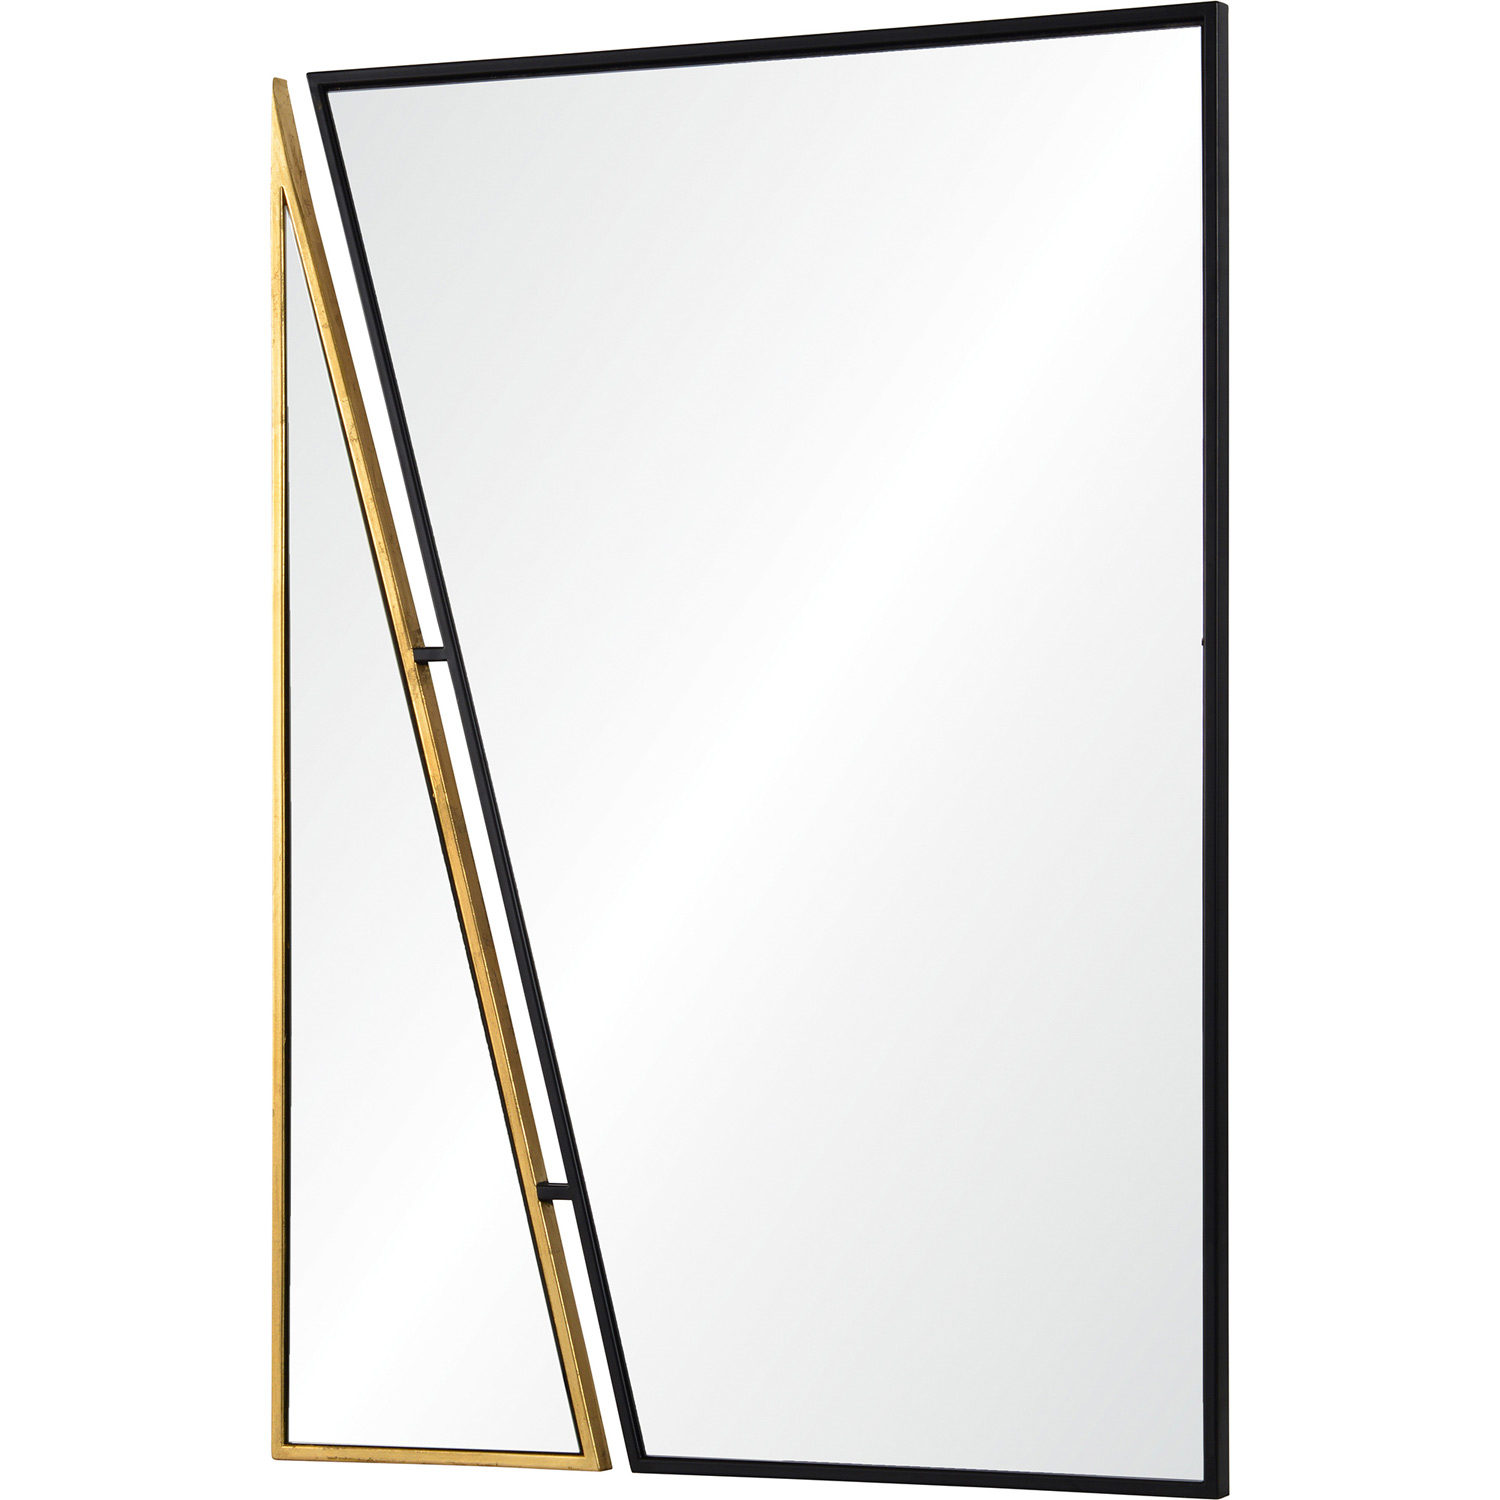 Ren-Wil Idiom Rectangle Mirror - Black/Antique Gold